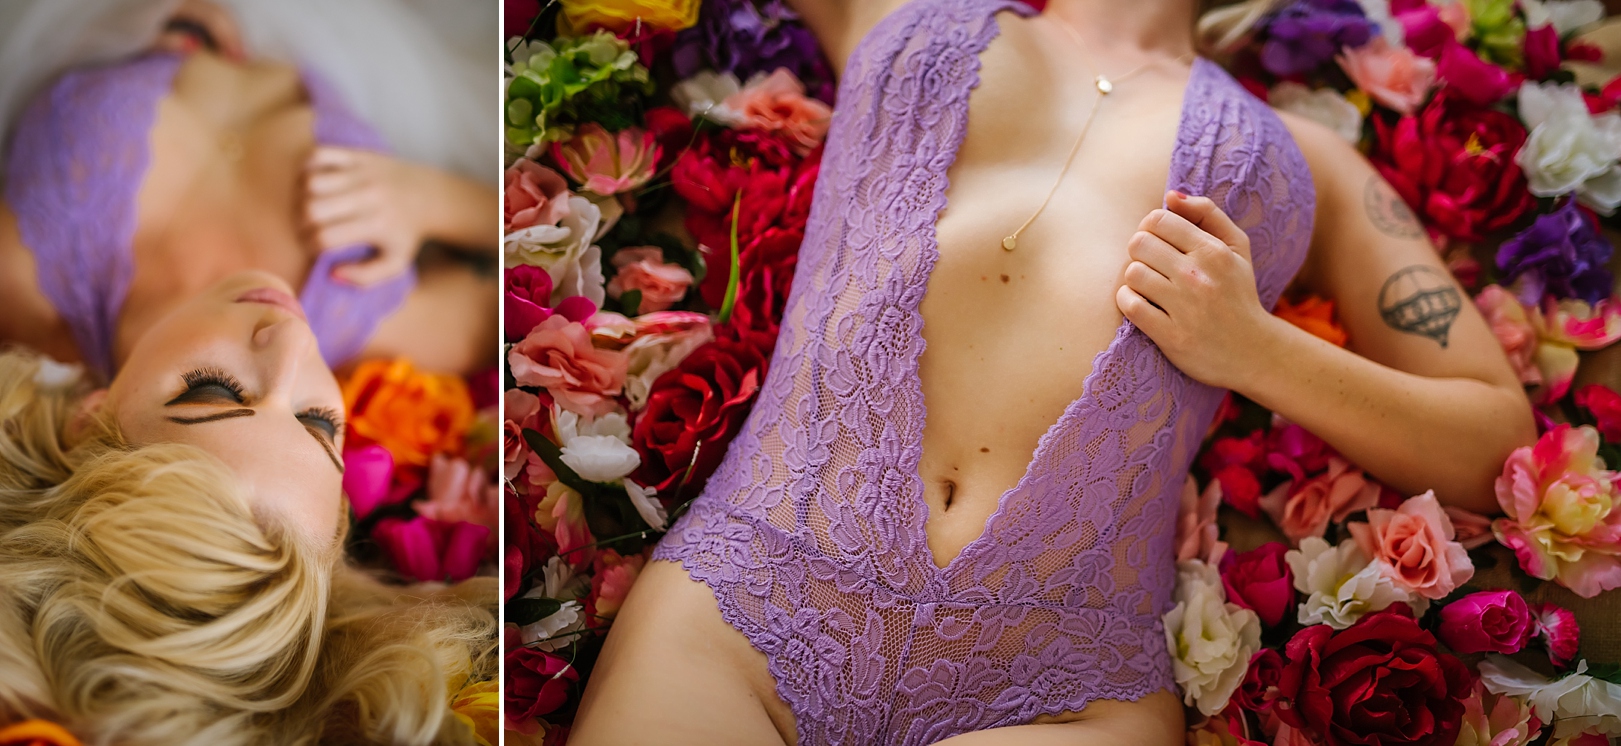 creative-hipster-boudoir-photos-tampa-studio-flowers-bathtub_0003.jpg